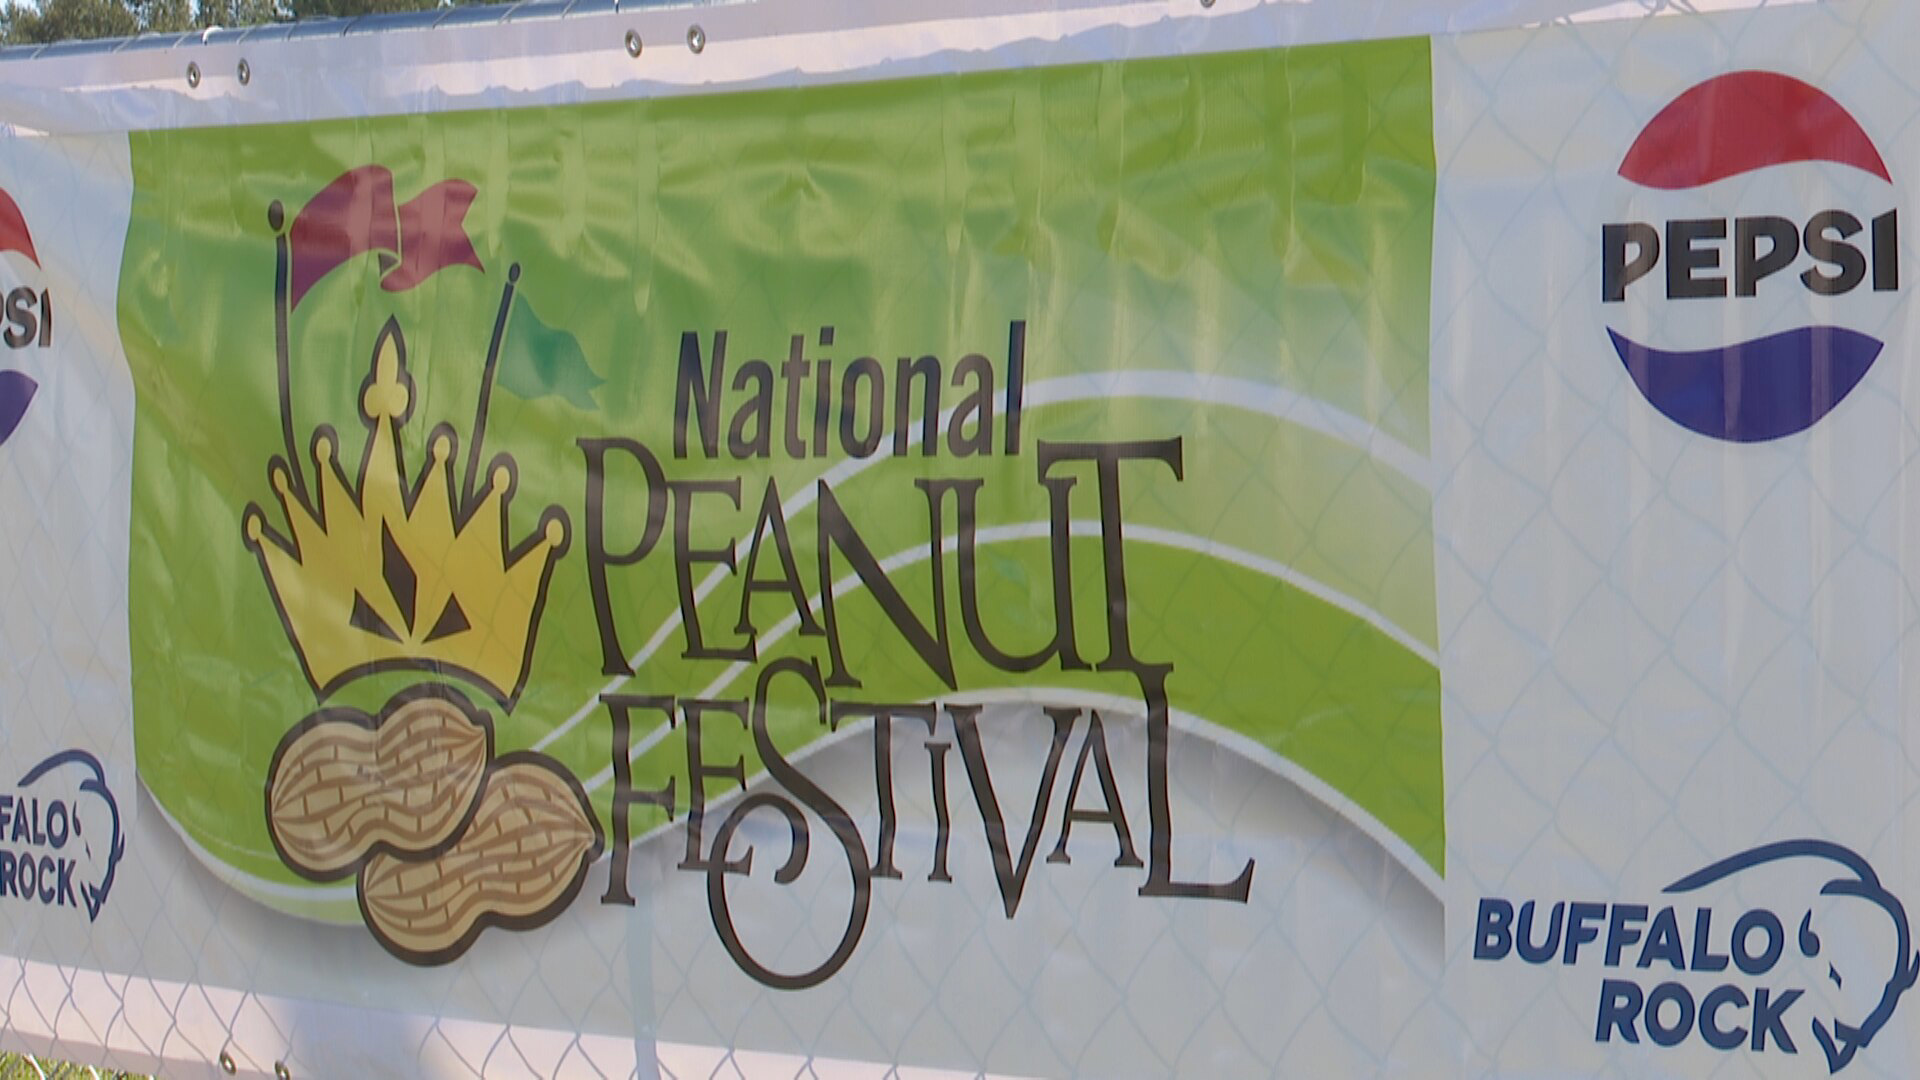 Preparing for another massive National Peanut Festival